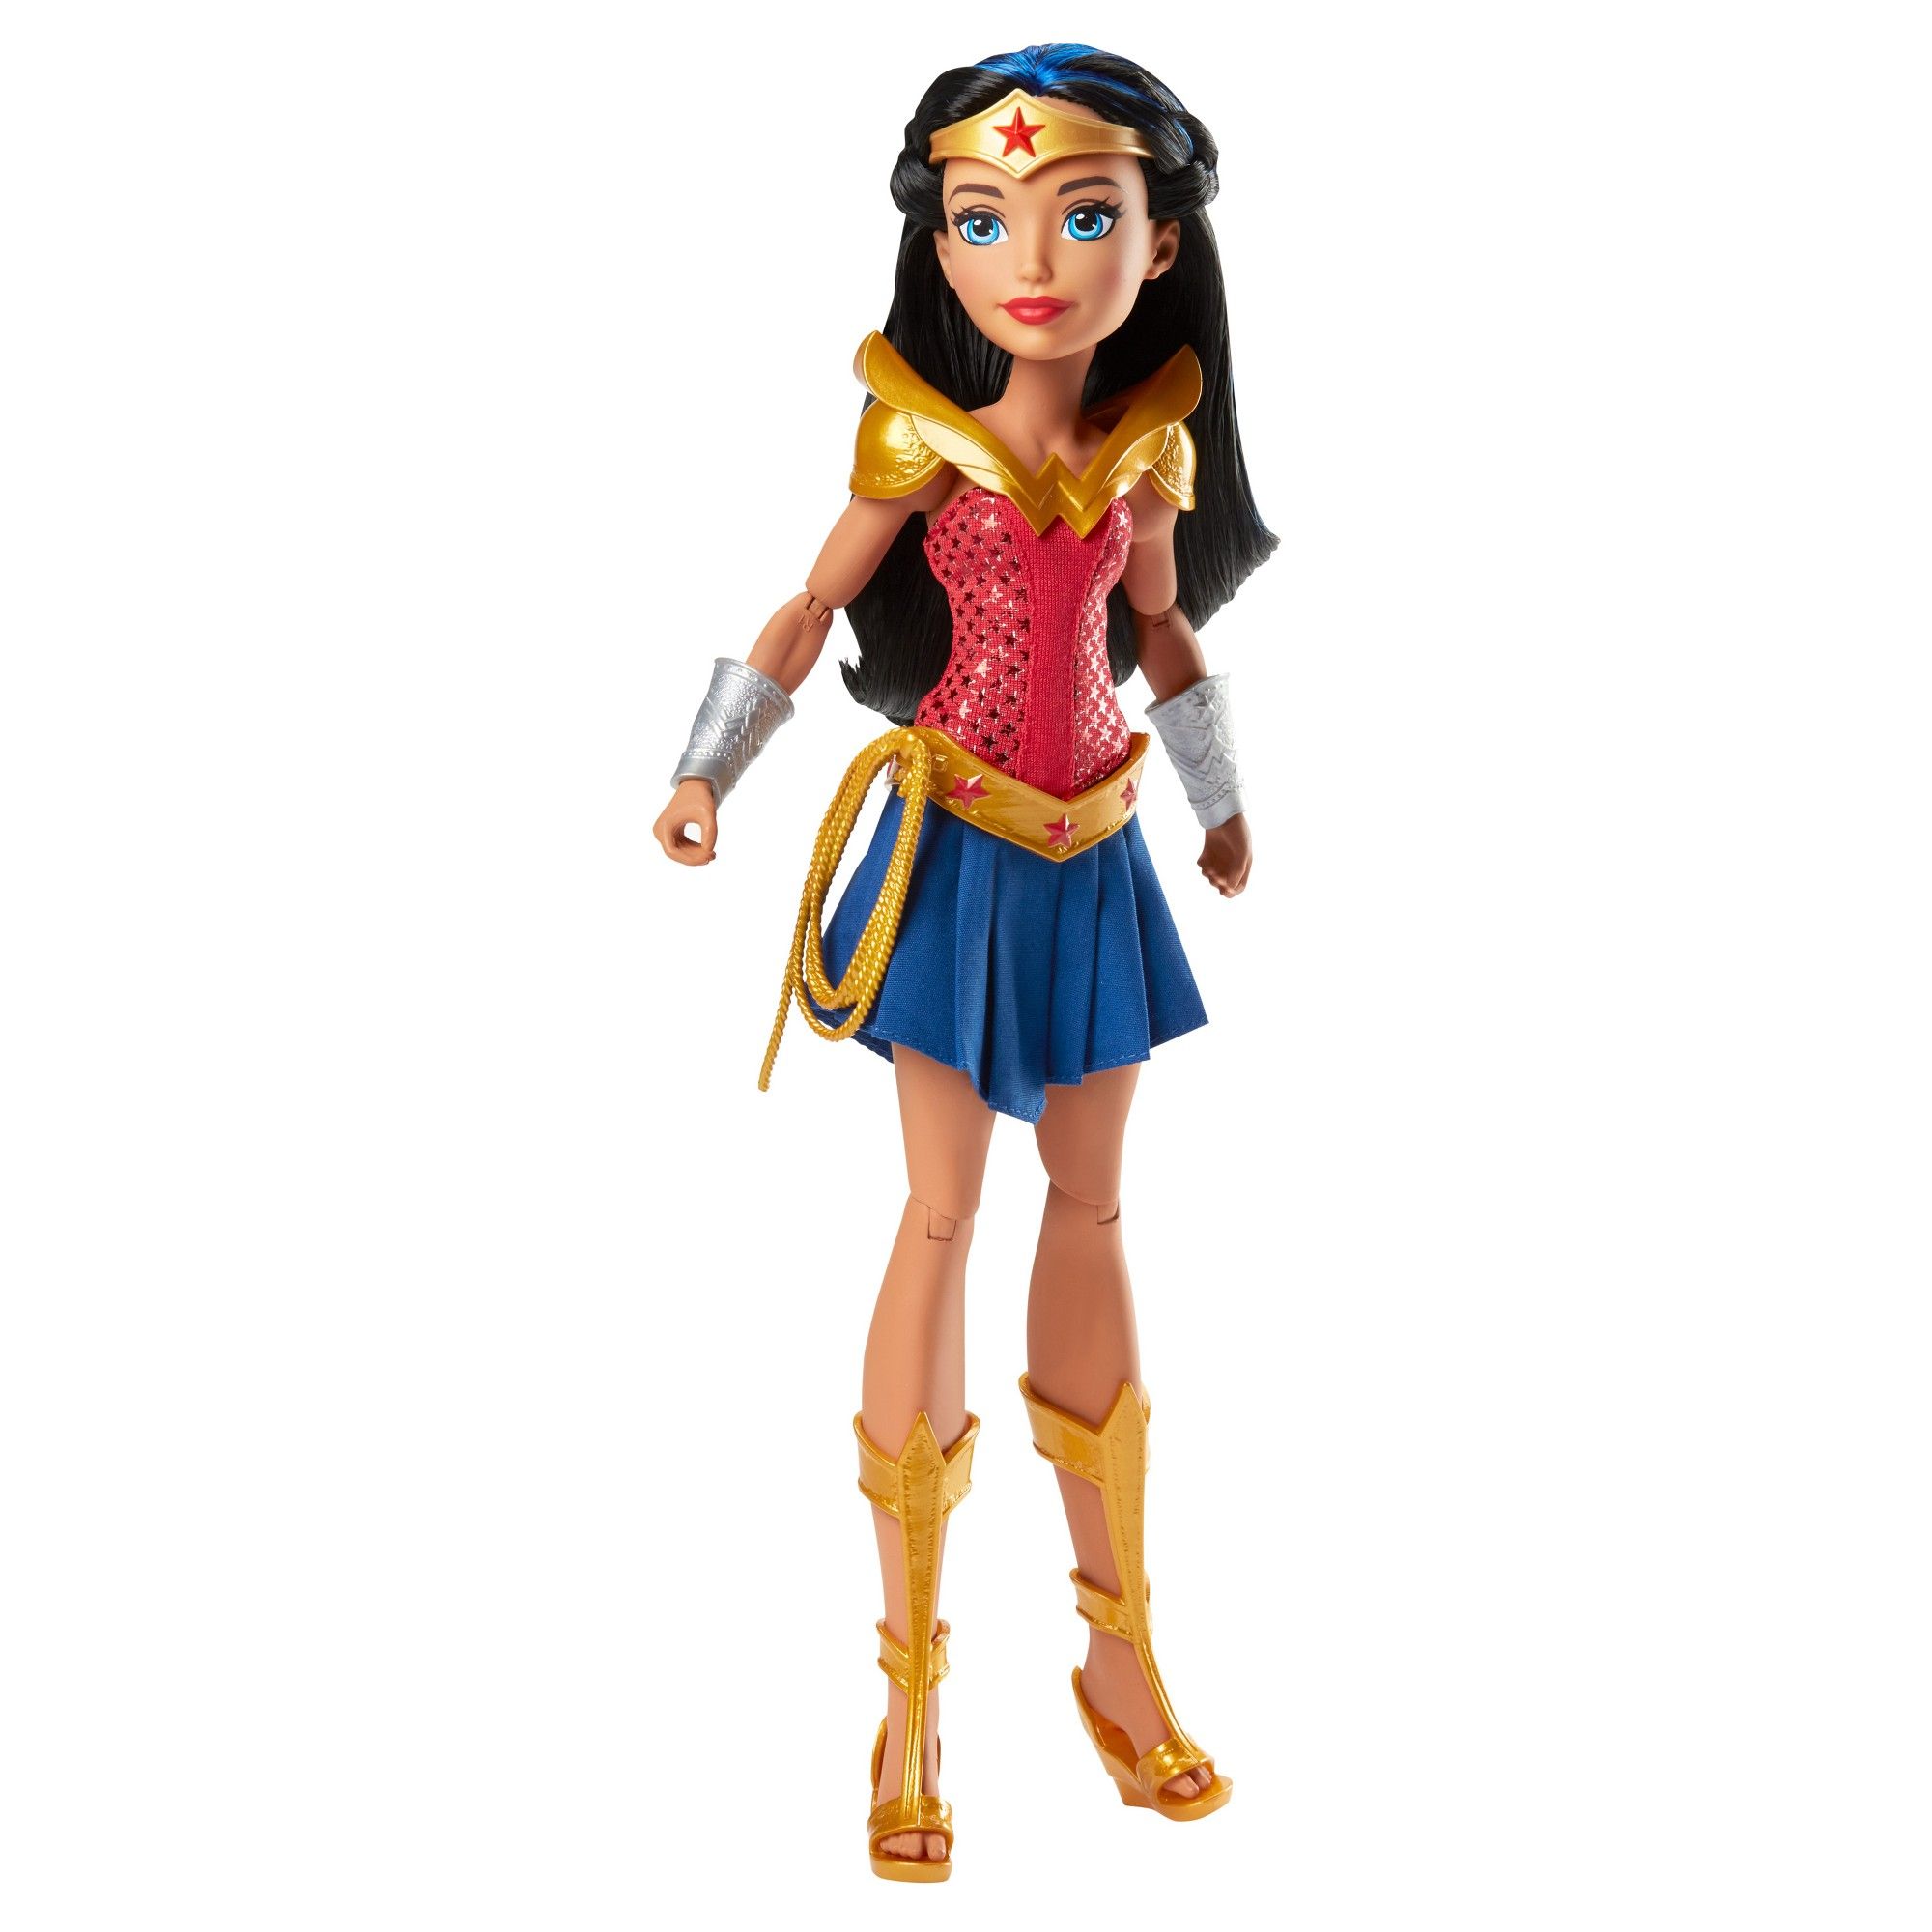 Barbie costume super hero girls